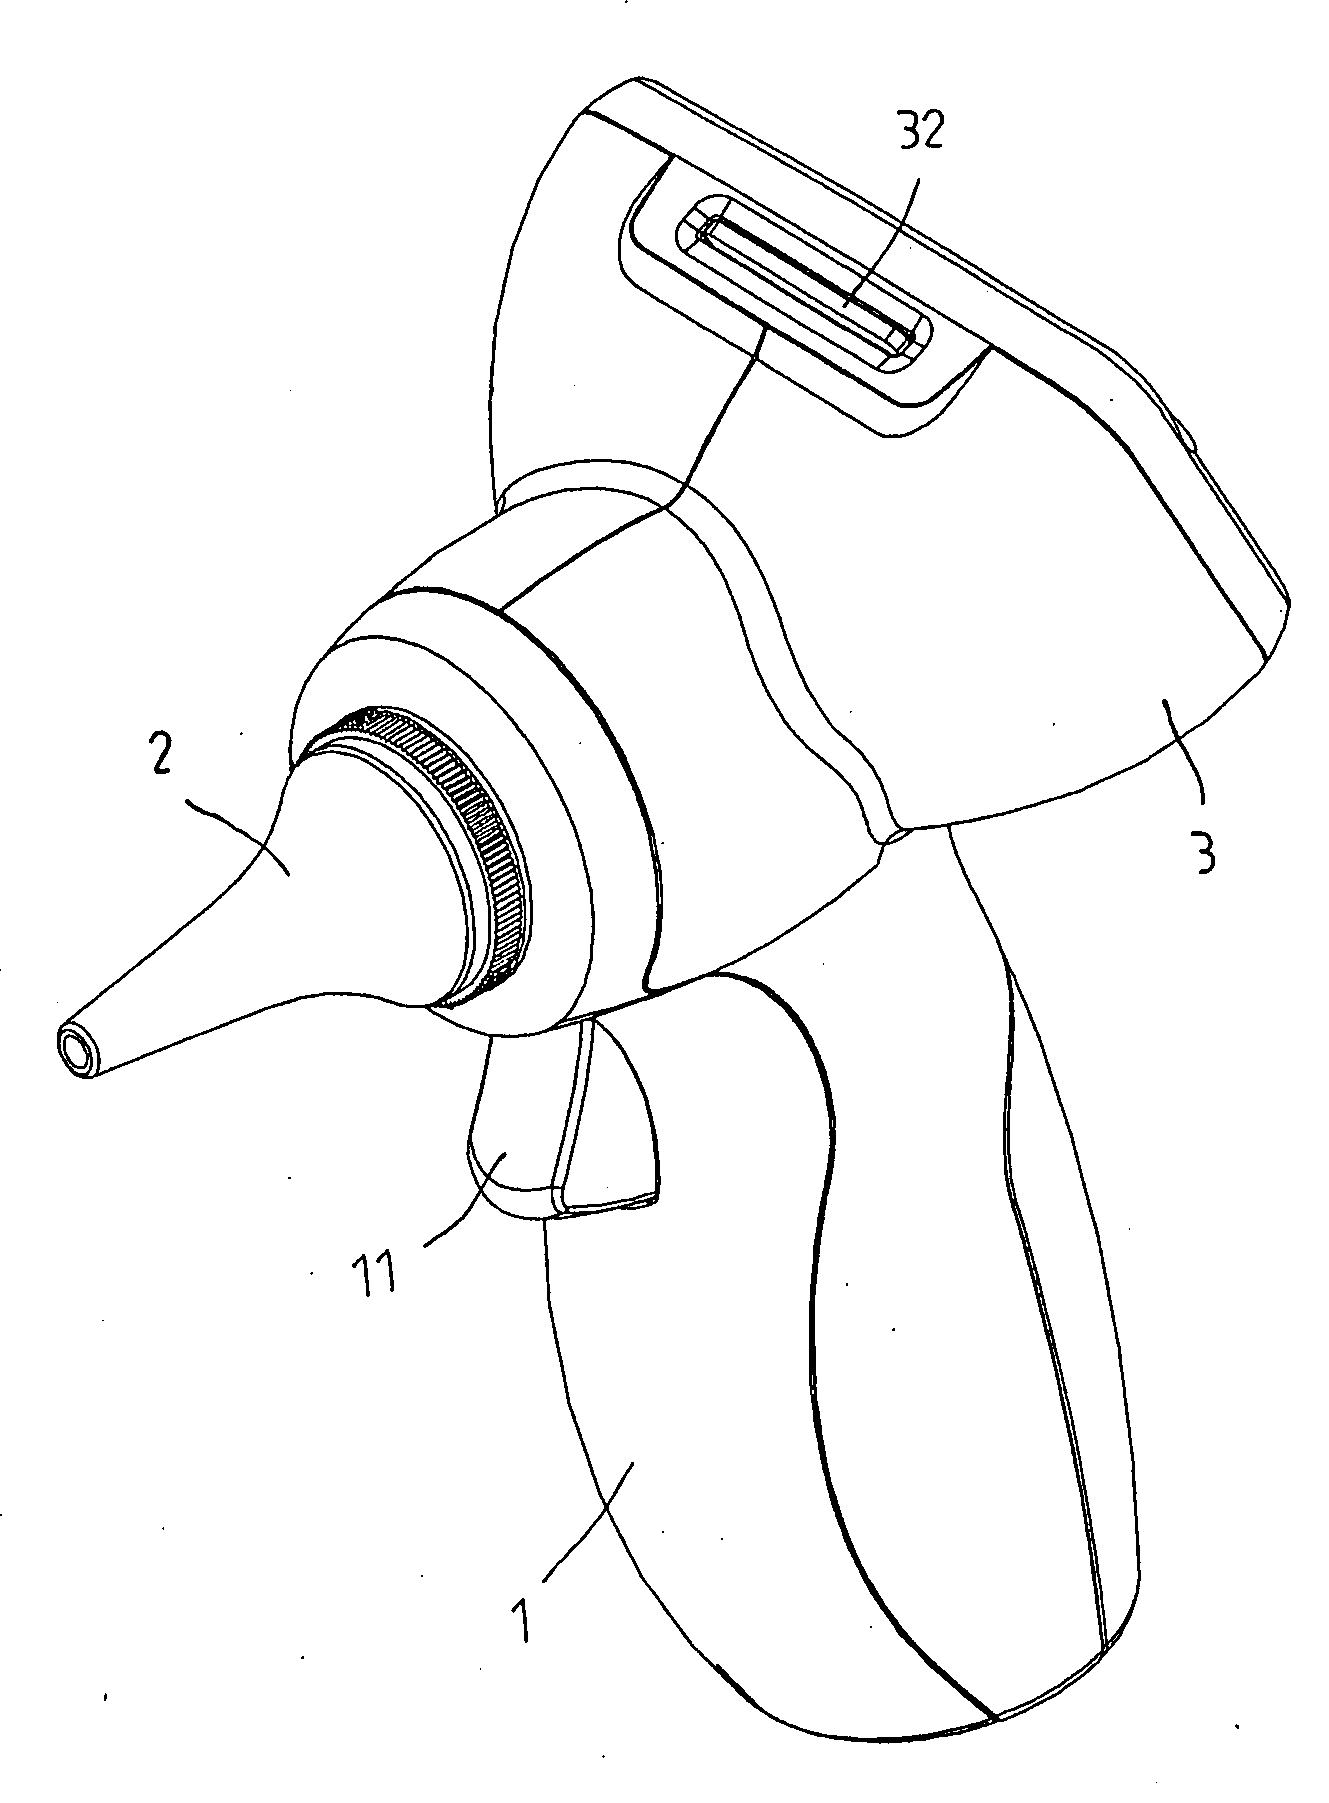 Portable otoscope device